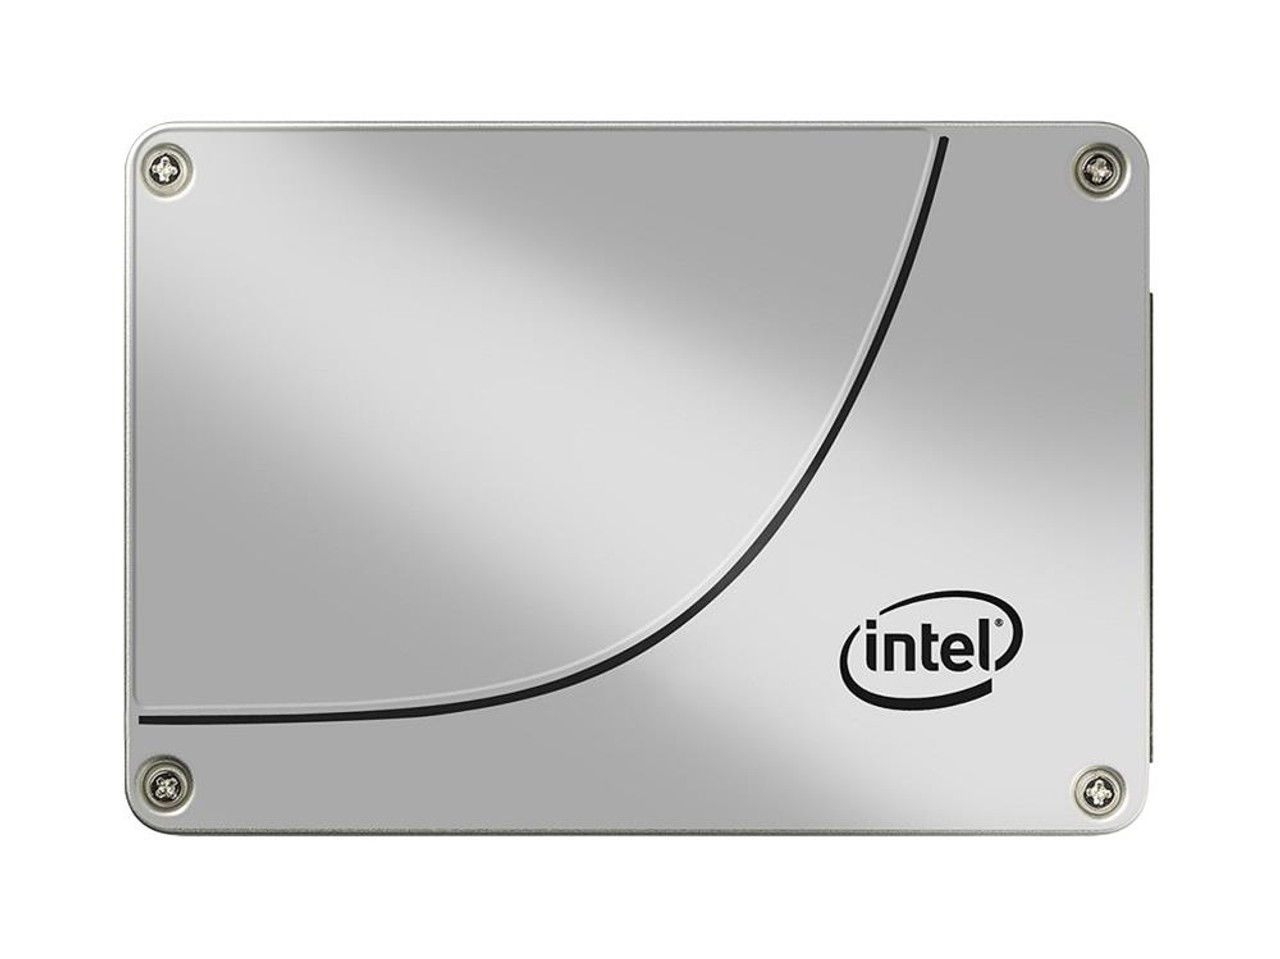 SSDSA2CW080G301 Intel 320 Series 80GB MLC SATA 3Gbps 2.5-inch Internal Solid State Drive (SSD)